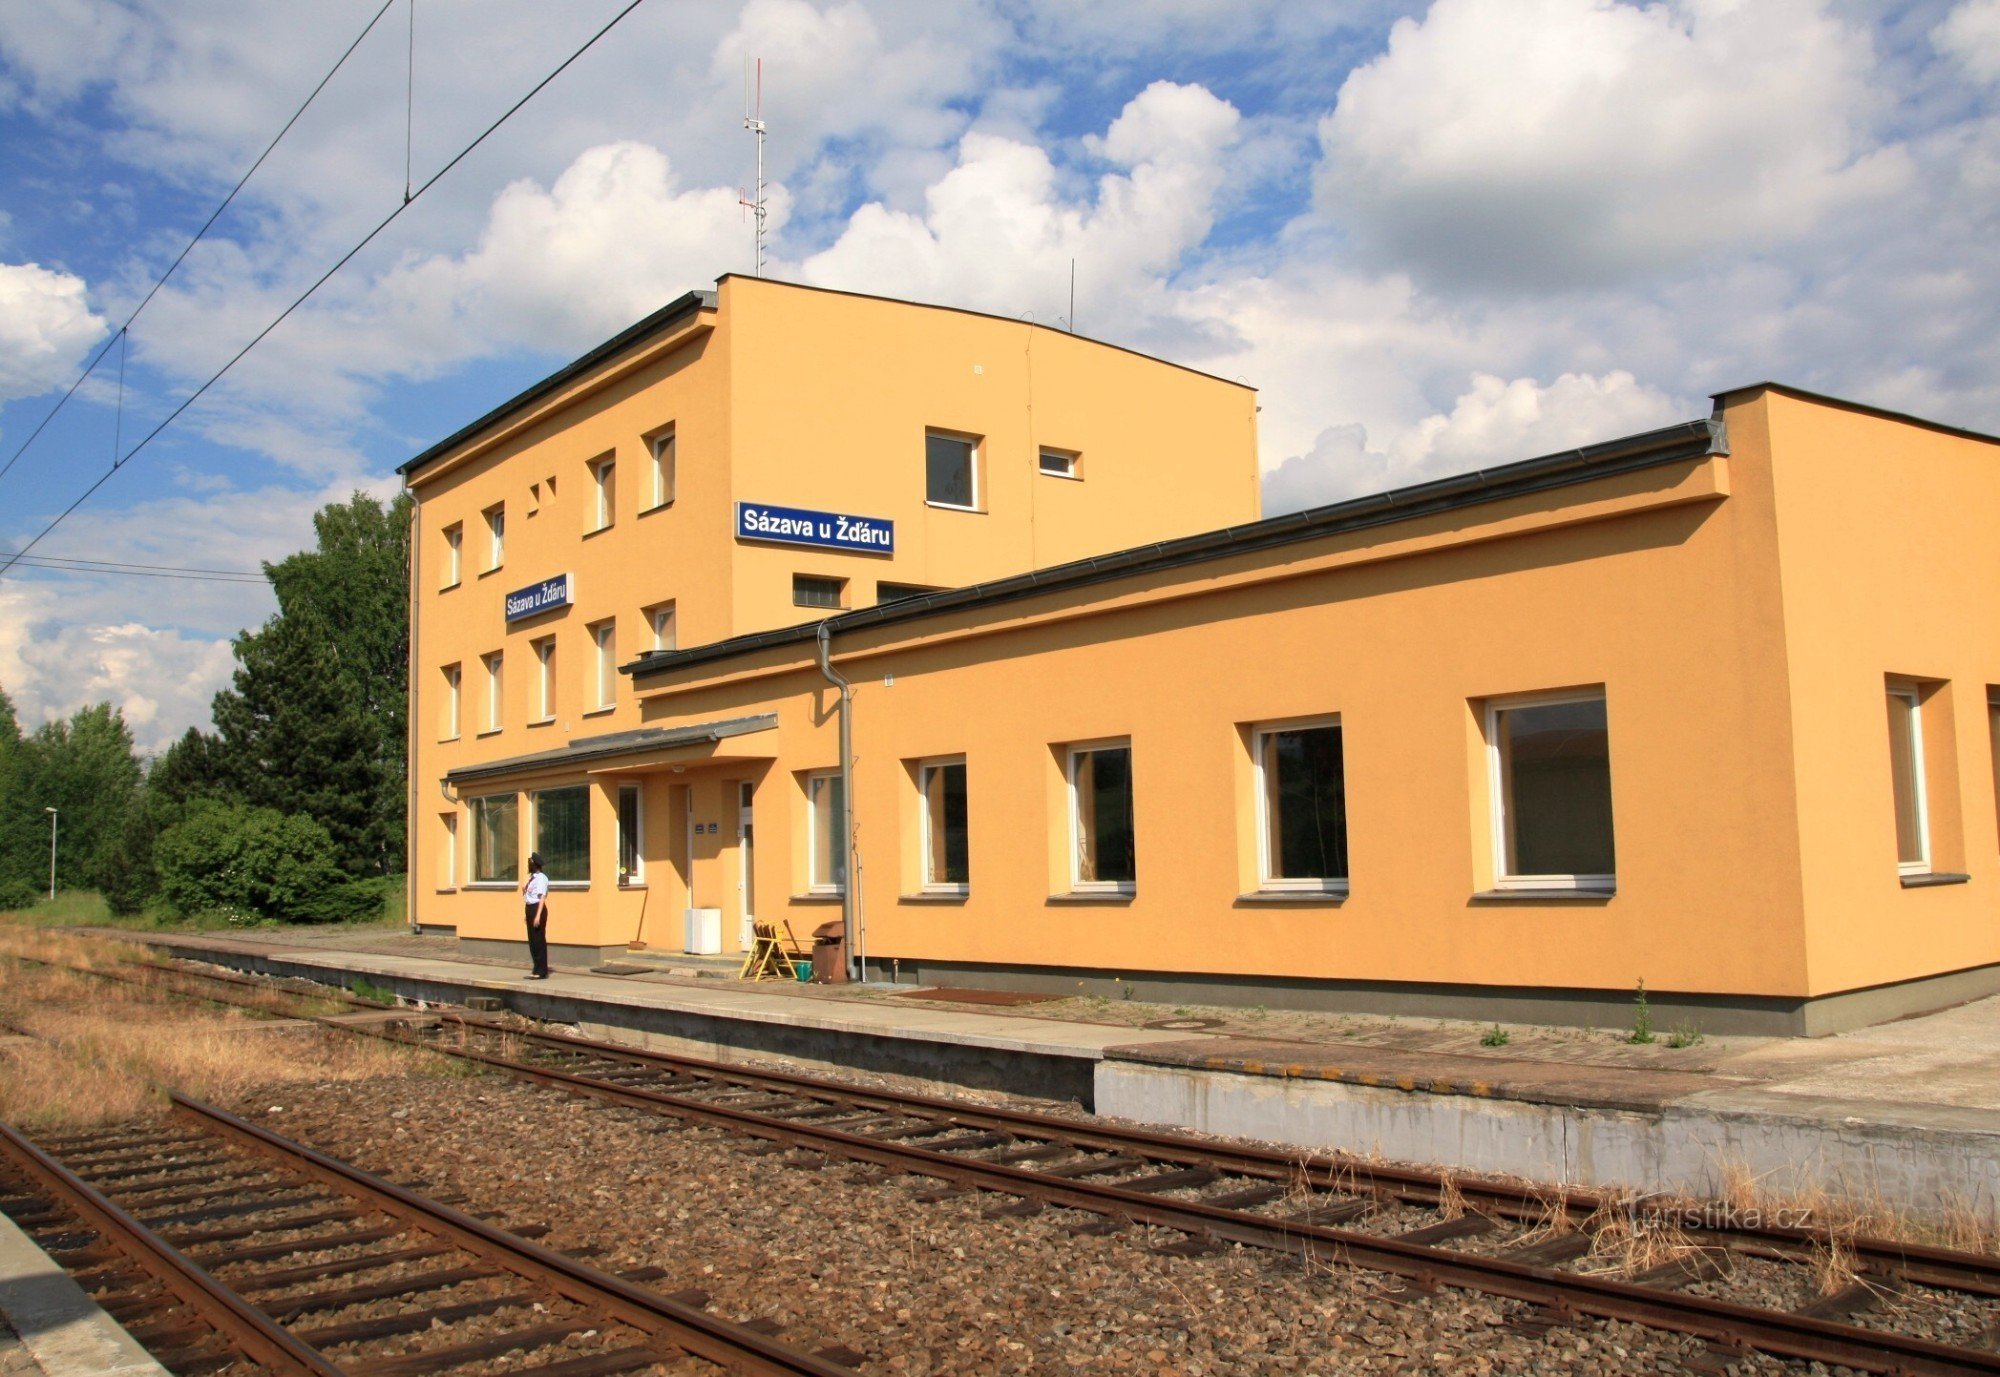 Sázava u Žďár - railway station